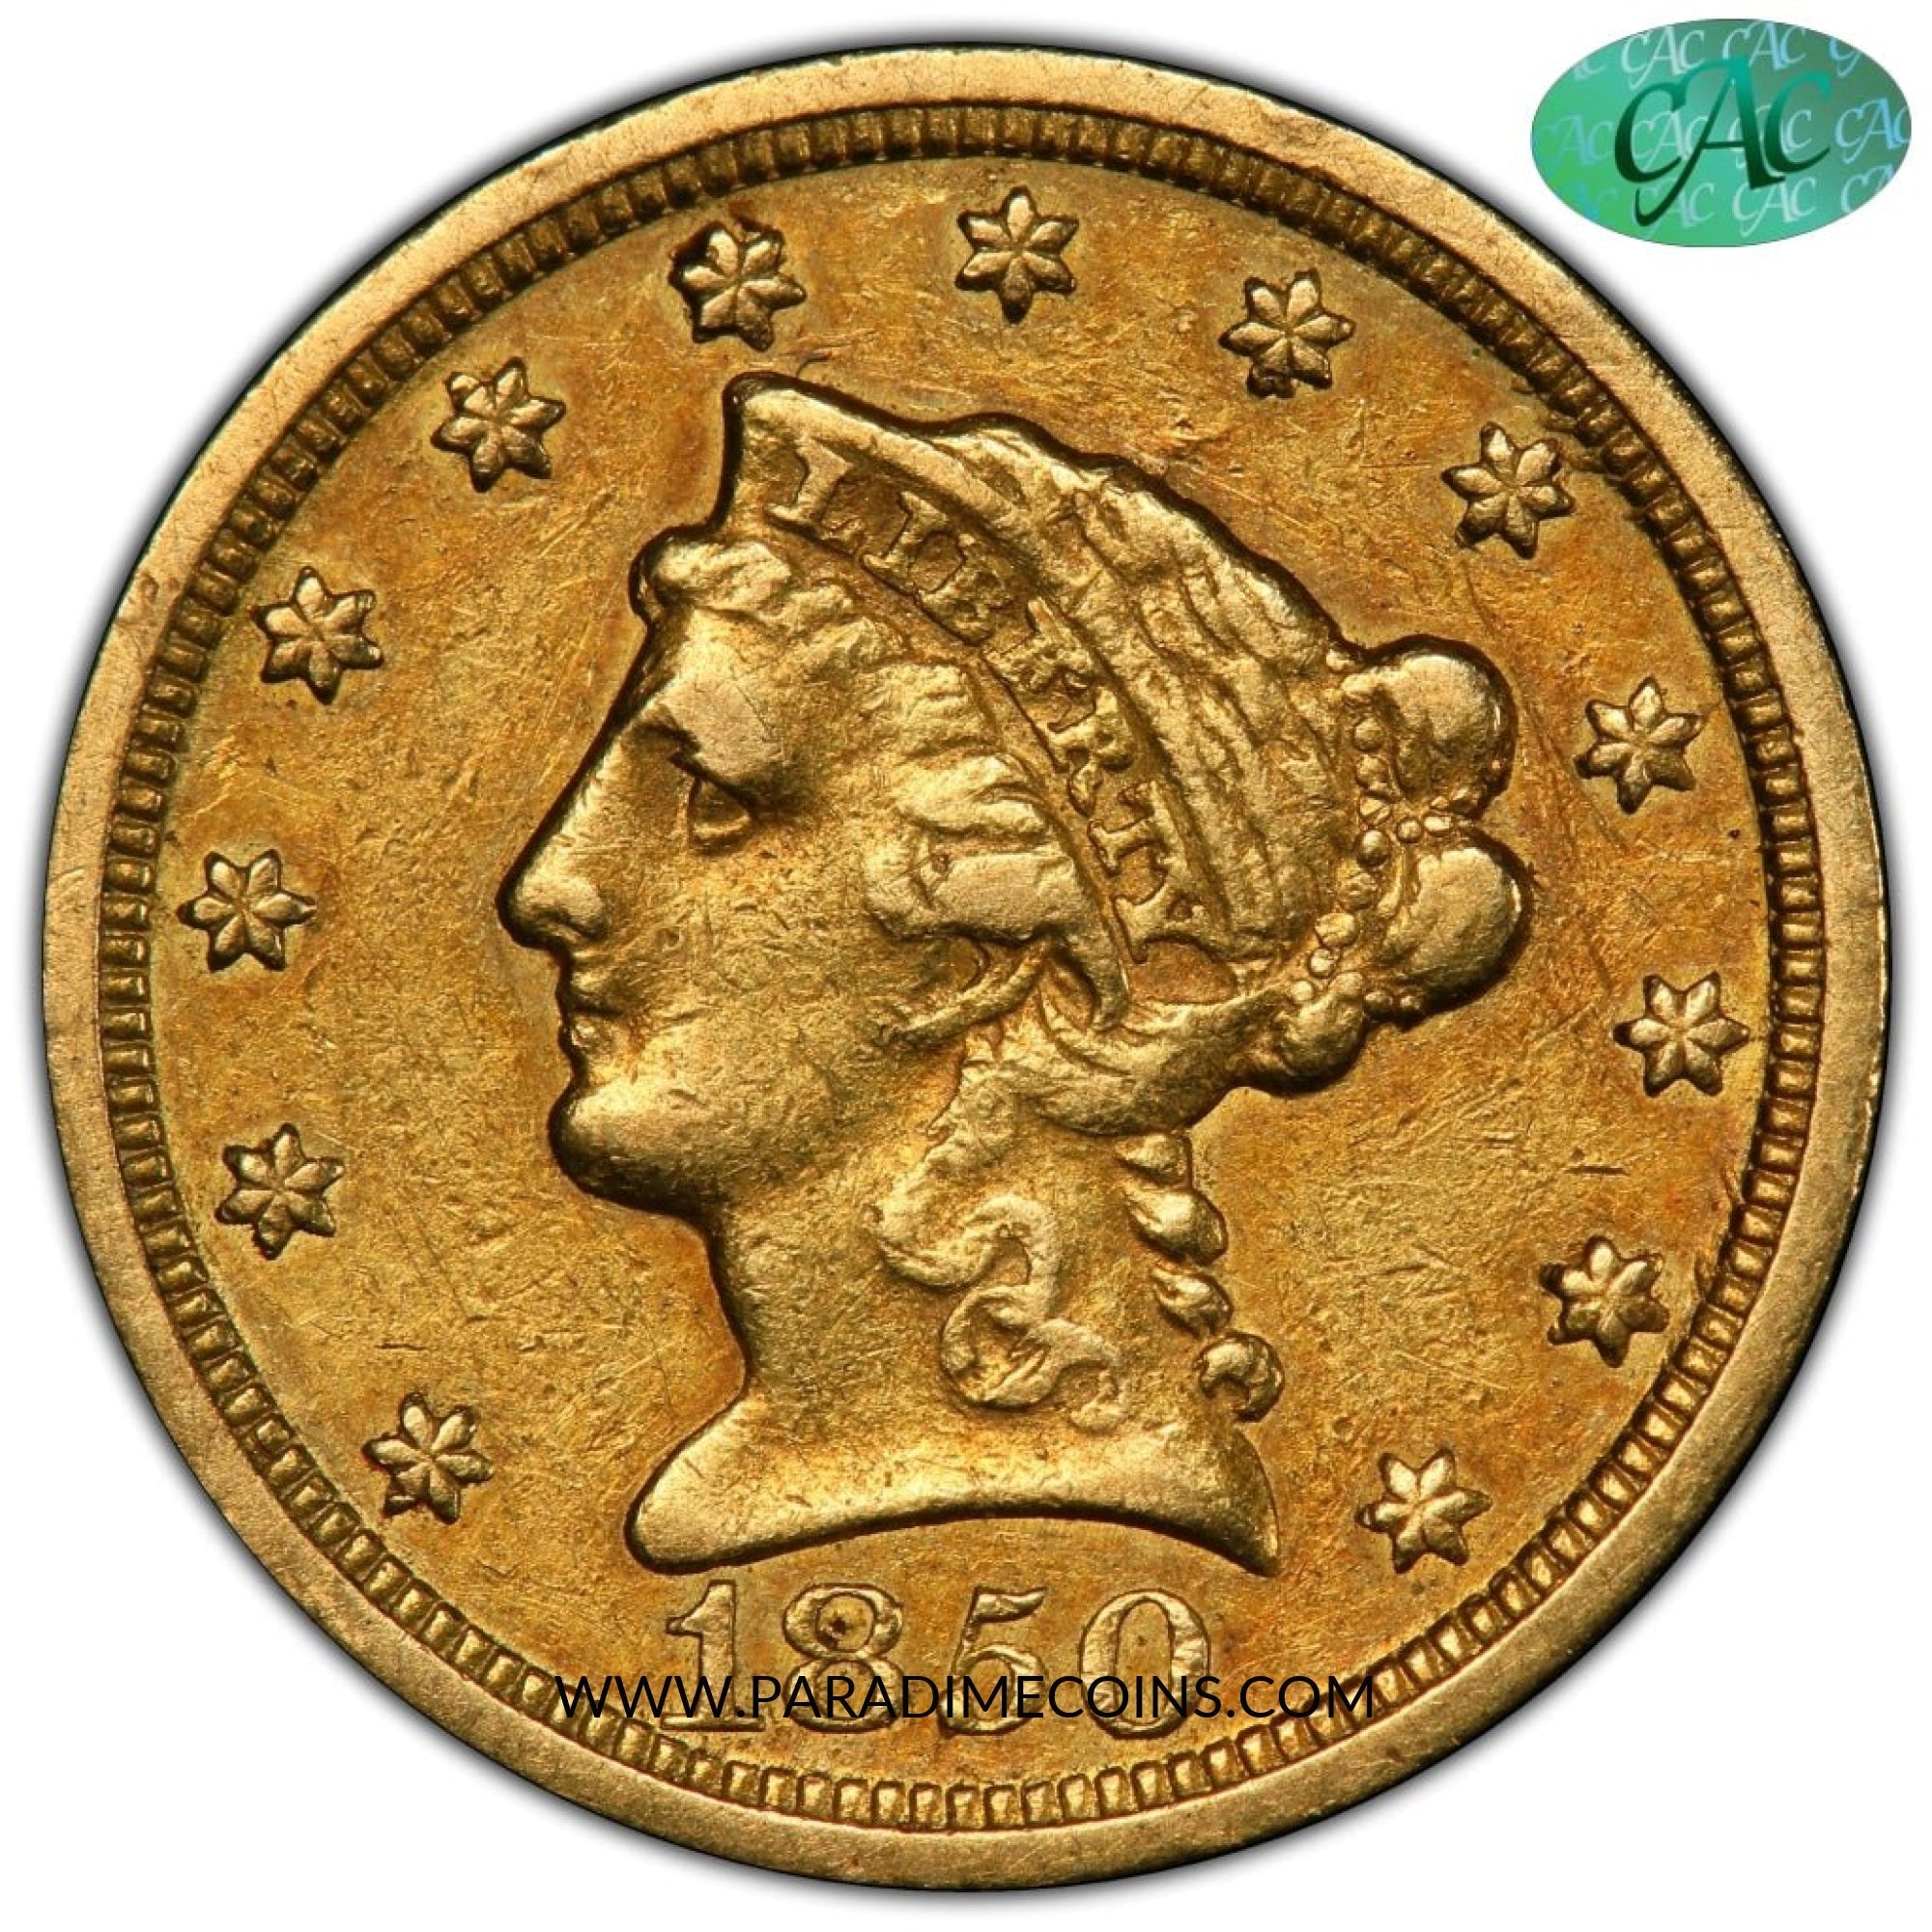 1850-C $2.5 VF30 PCGS CAC - Paradime Coins | PCGS NGC CACG CAC Rare US Numismatic Coins For Sale